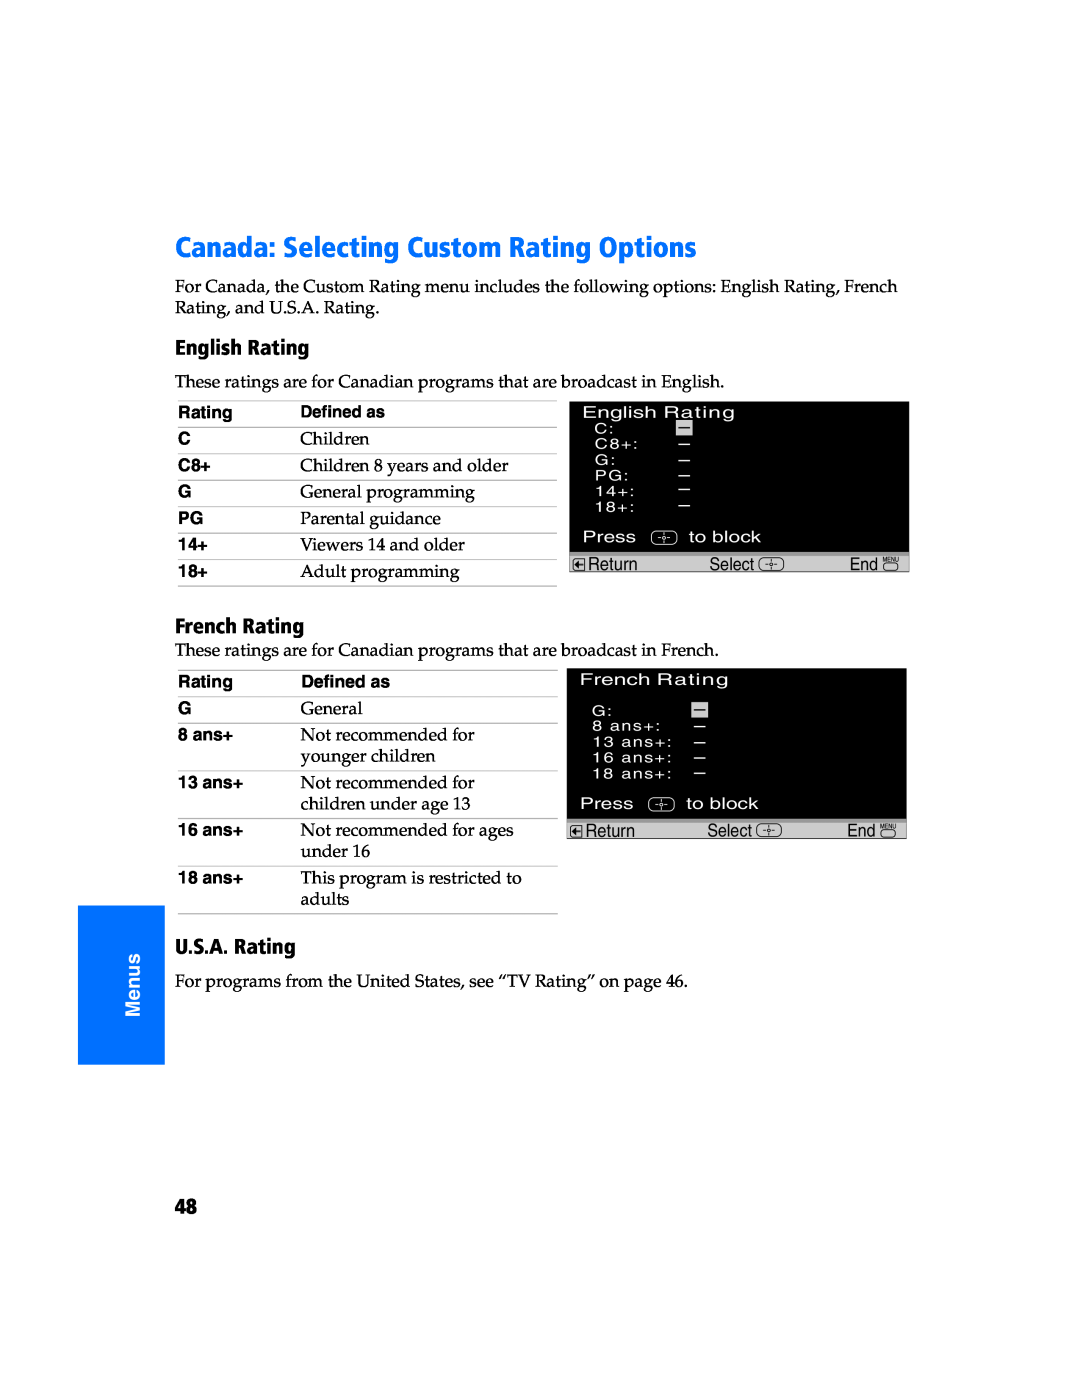 Sony KV 27FS320 Canada Selecting Custom Rating Options, English Rating, French Rating, U.S.A. Rating, Children, Menus 